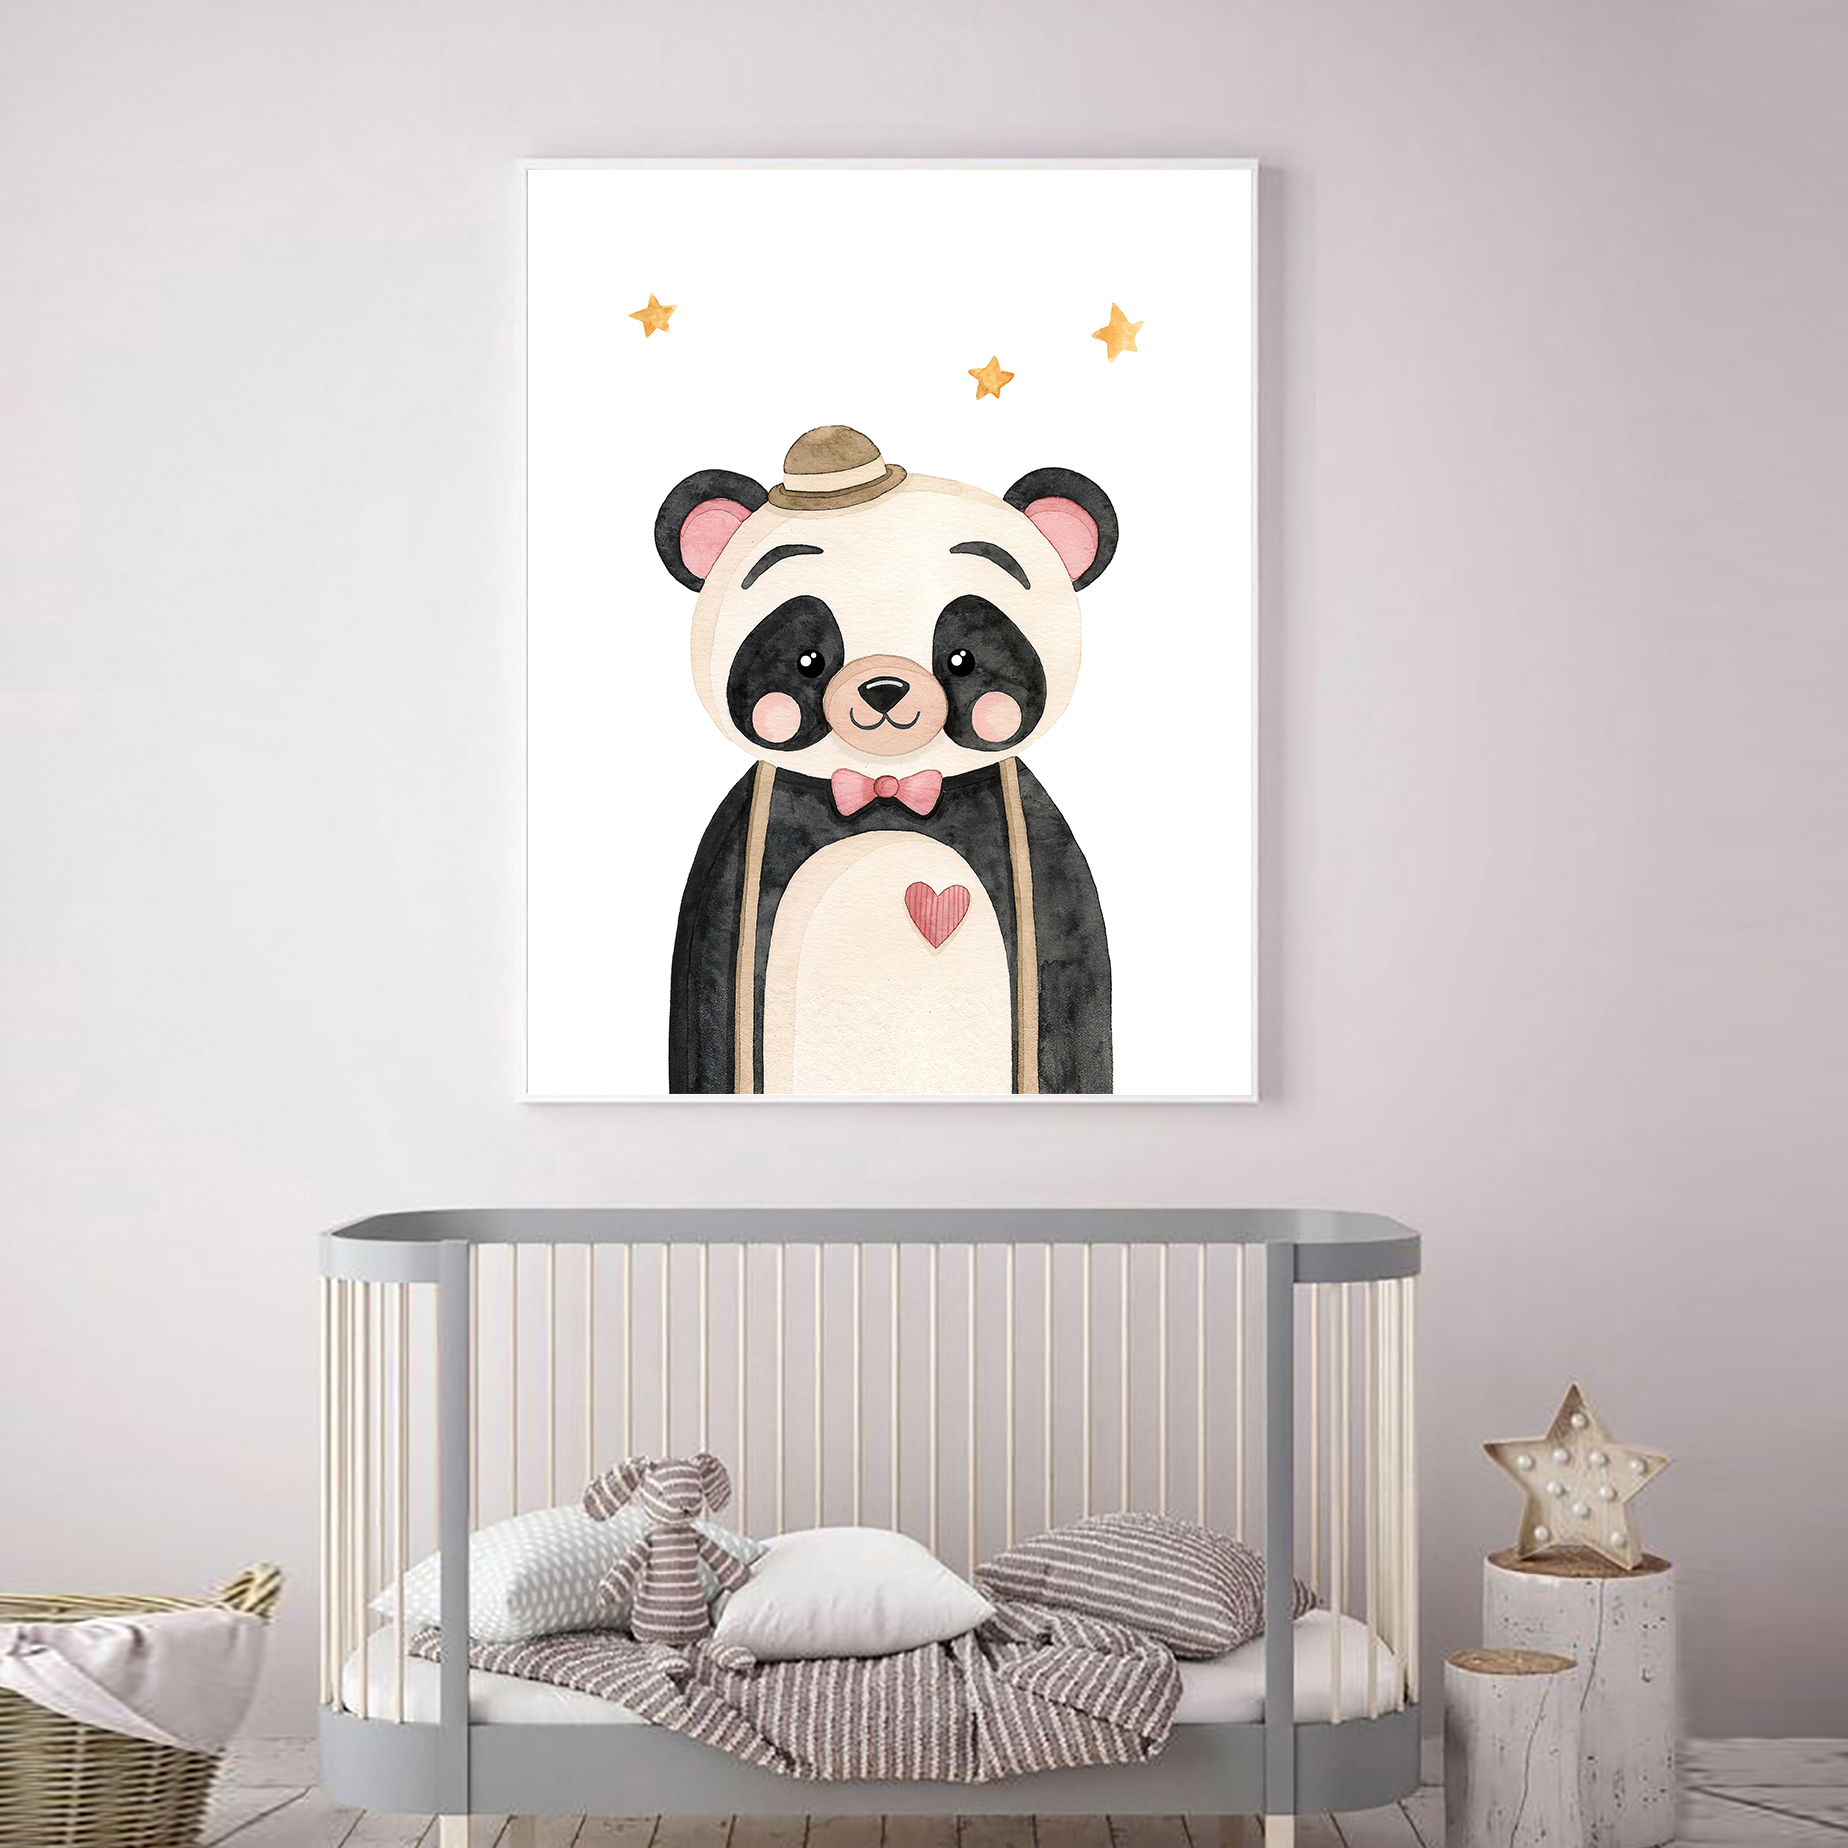 تابلو اتاق کودک و نوزاد الفاپ مدل پاندا کد Funny Panda 001